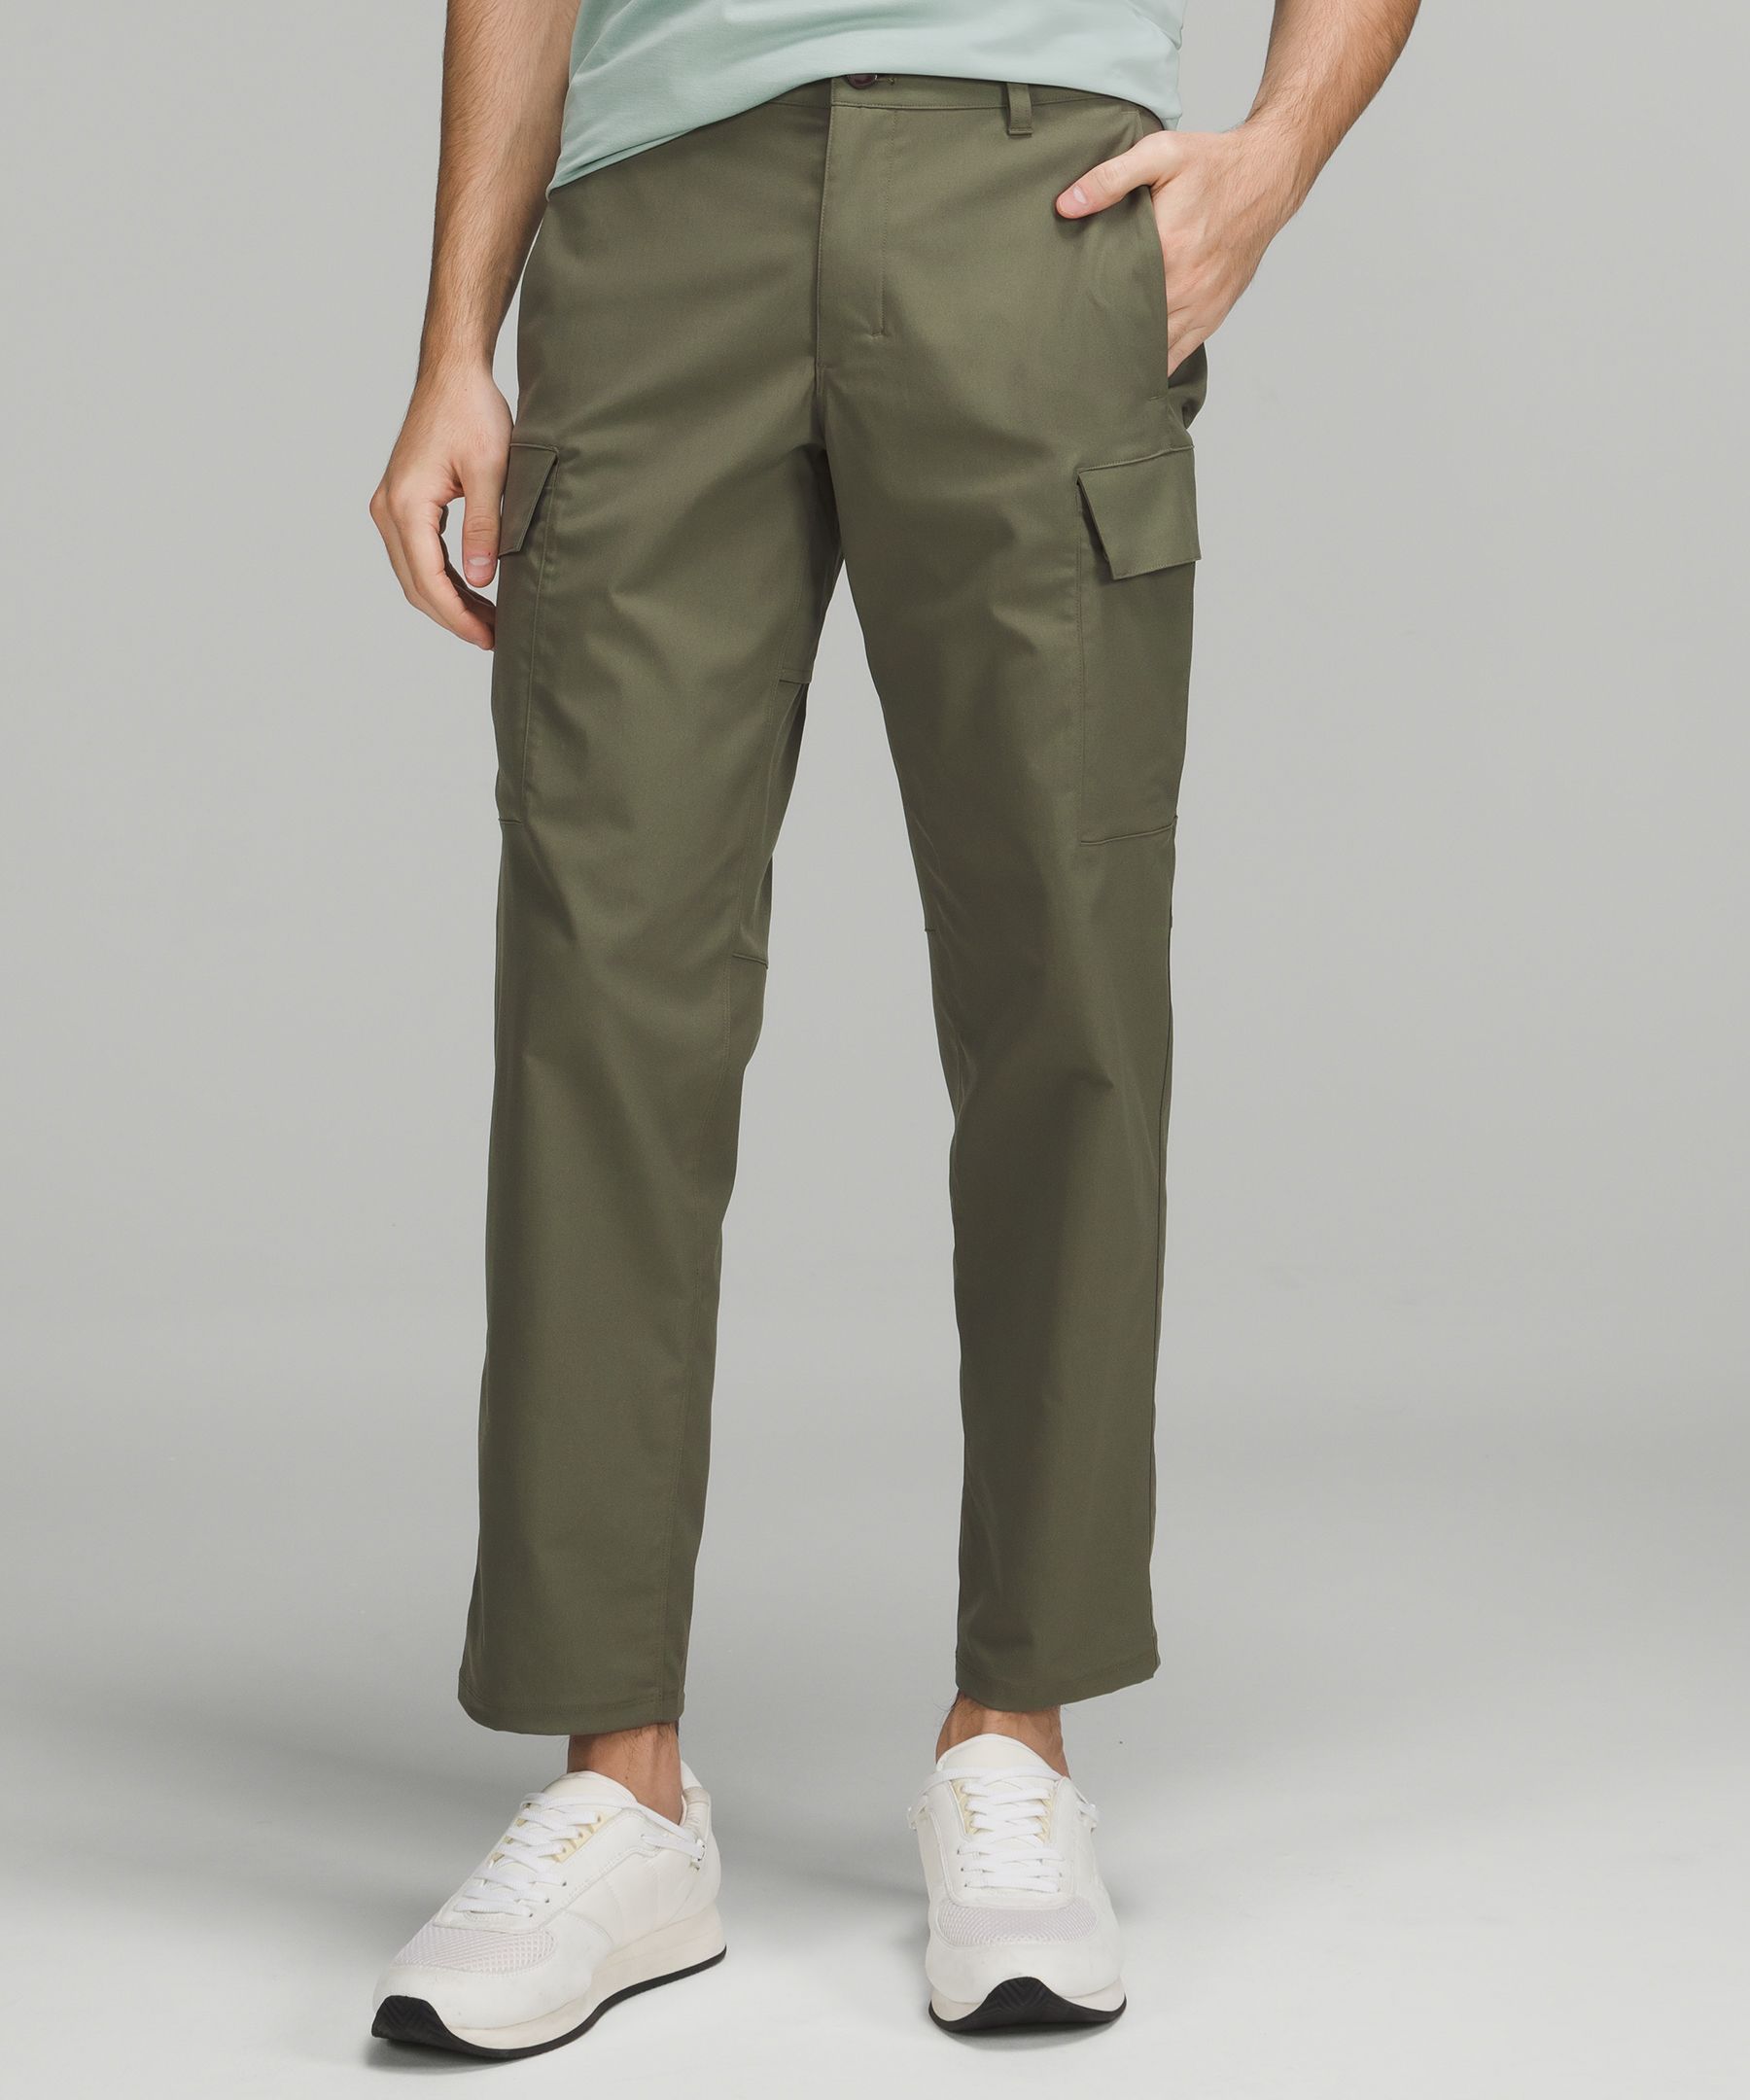 Military Green Utilitarian Cargo Female Pants